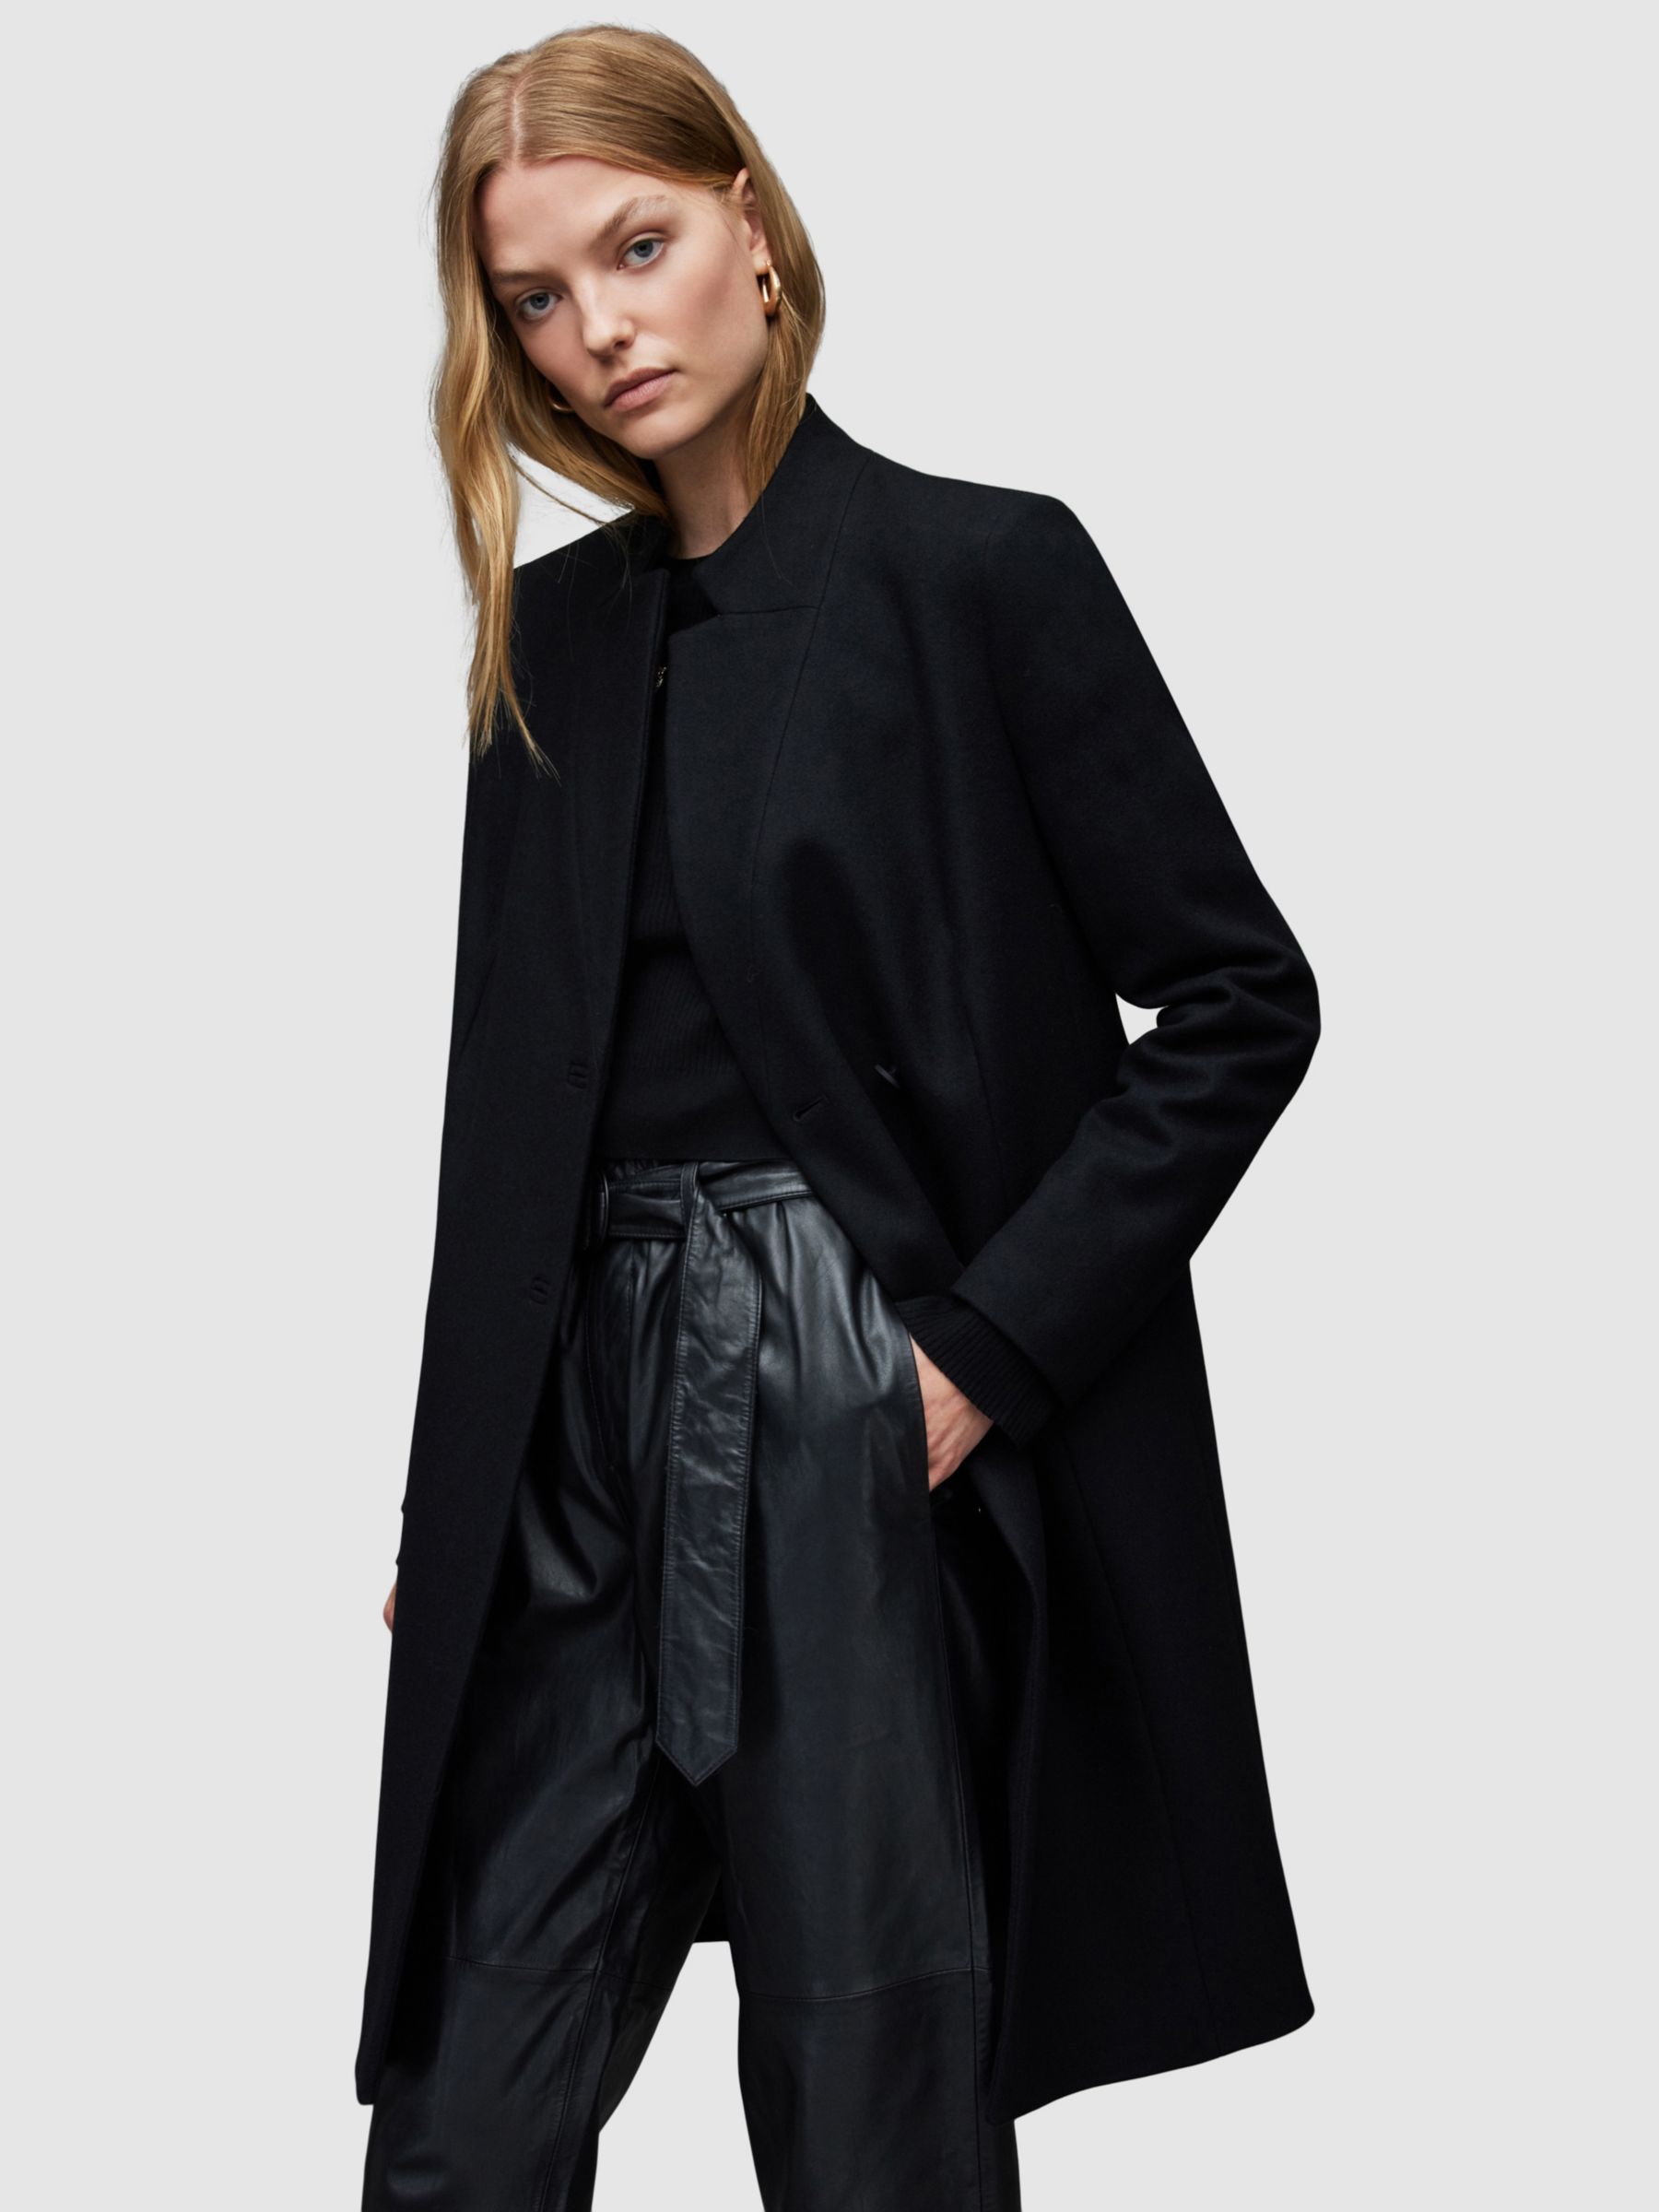 AllSaints Sidney Wool Blend Coat, Black at John Lewis & Partners